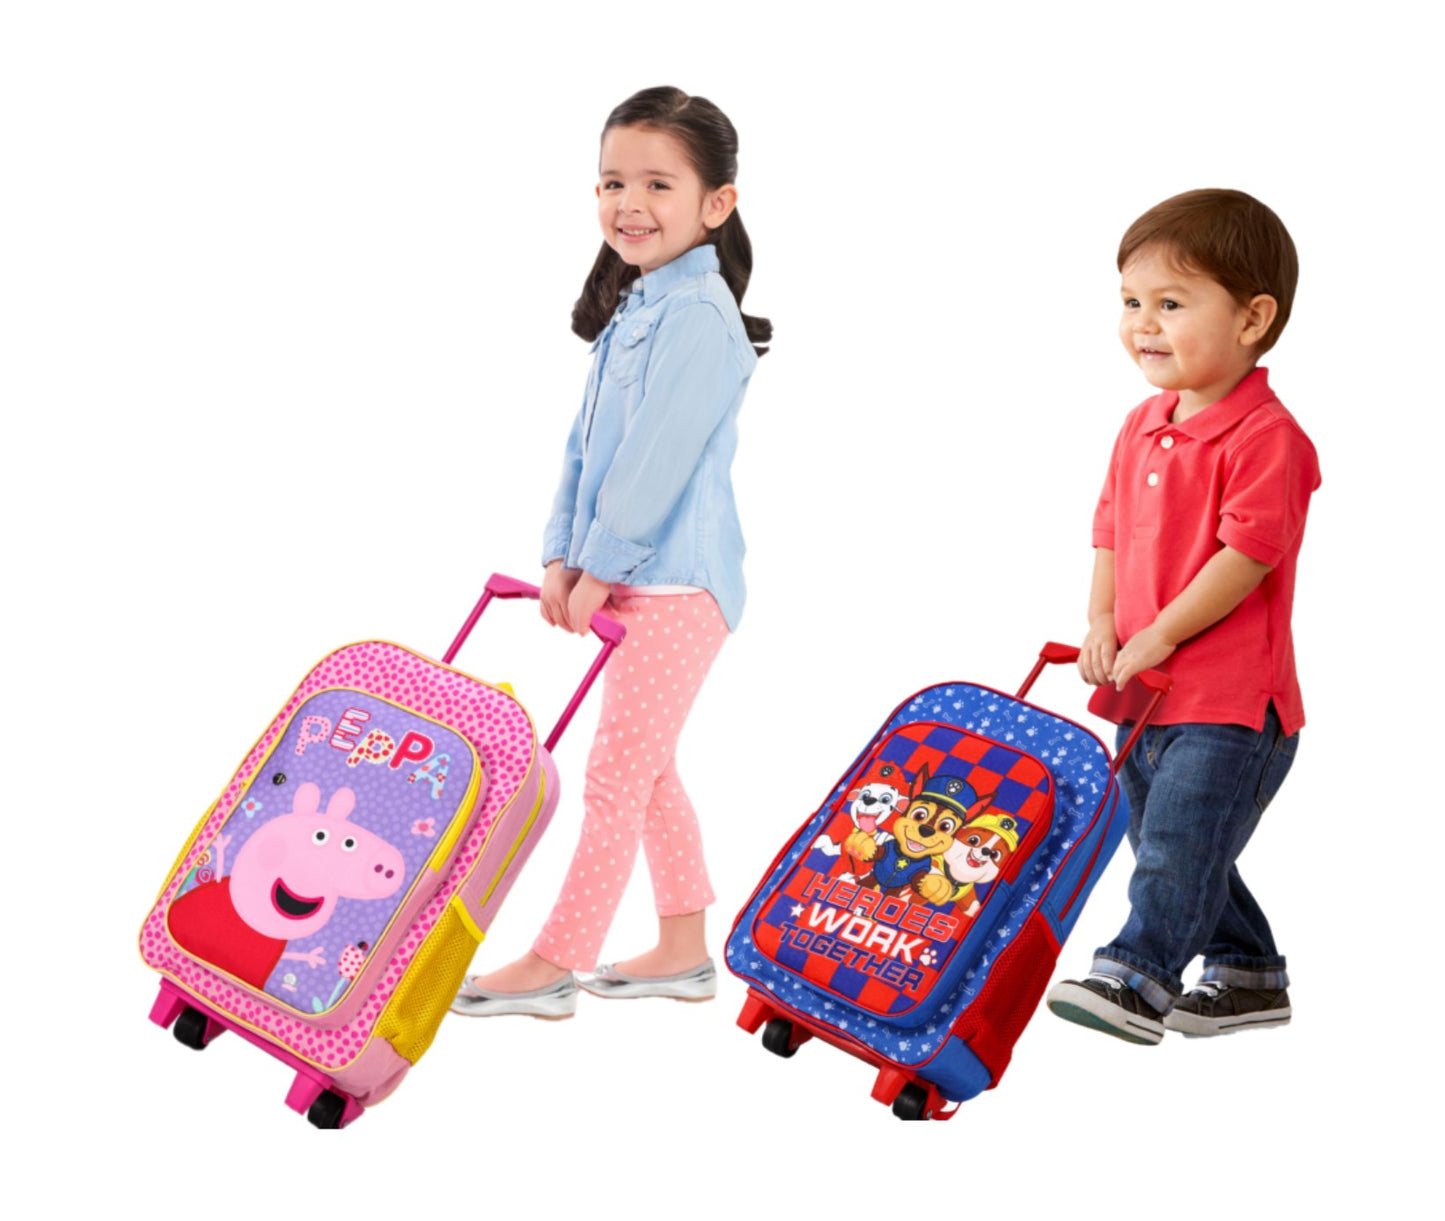 Disney Princess Girl’s Wheeled Trolley for School Travel Holidays